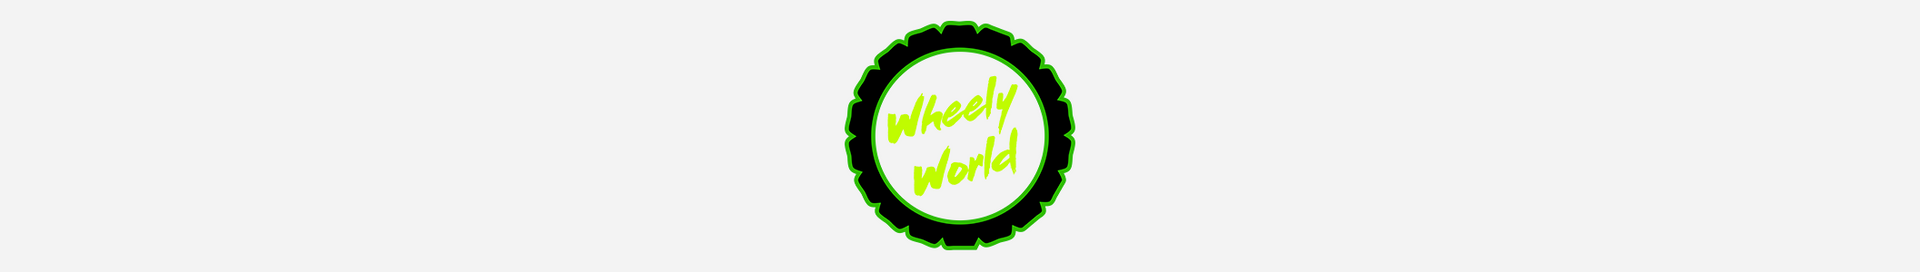 WheelyWorld